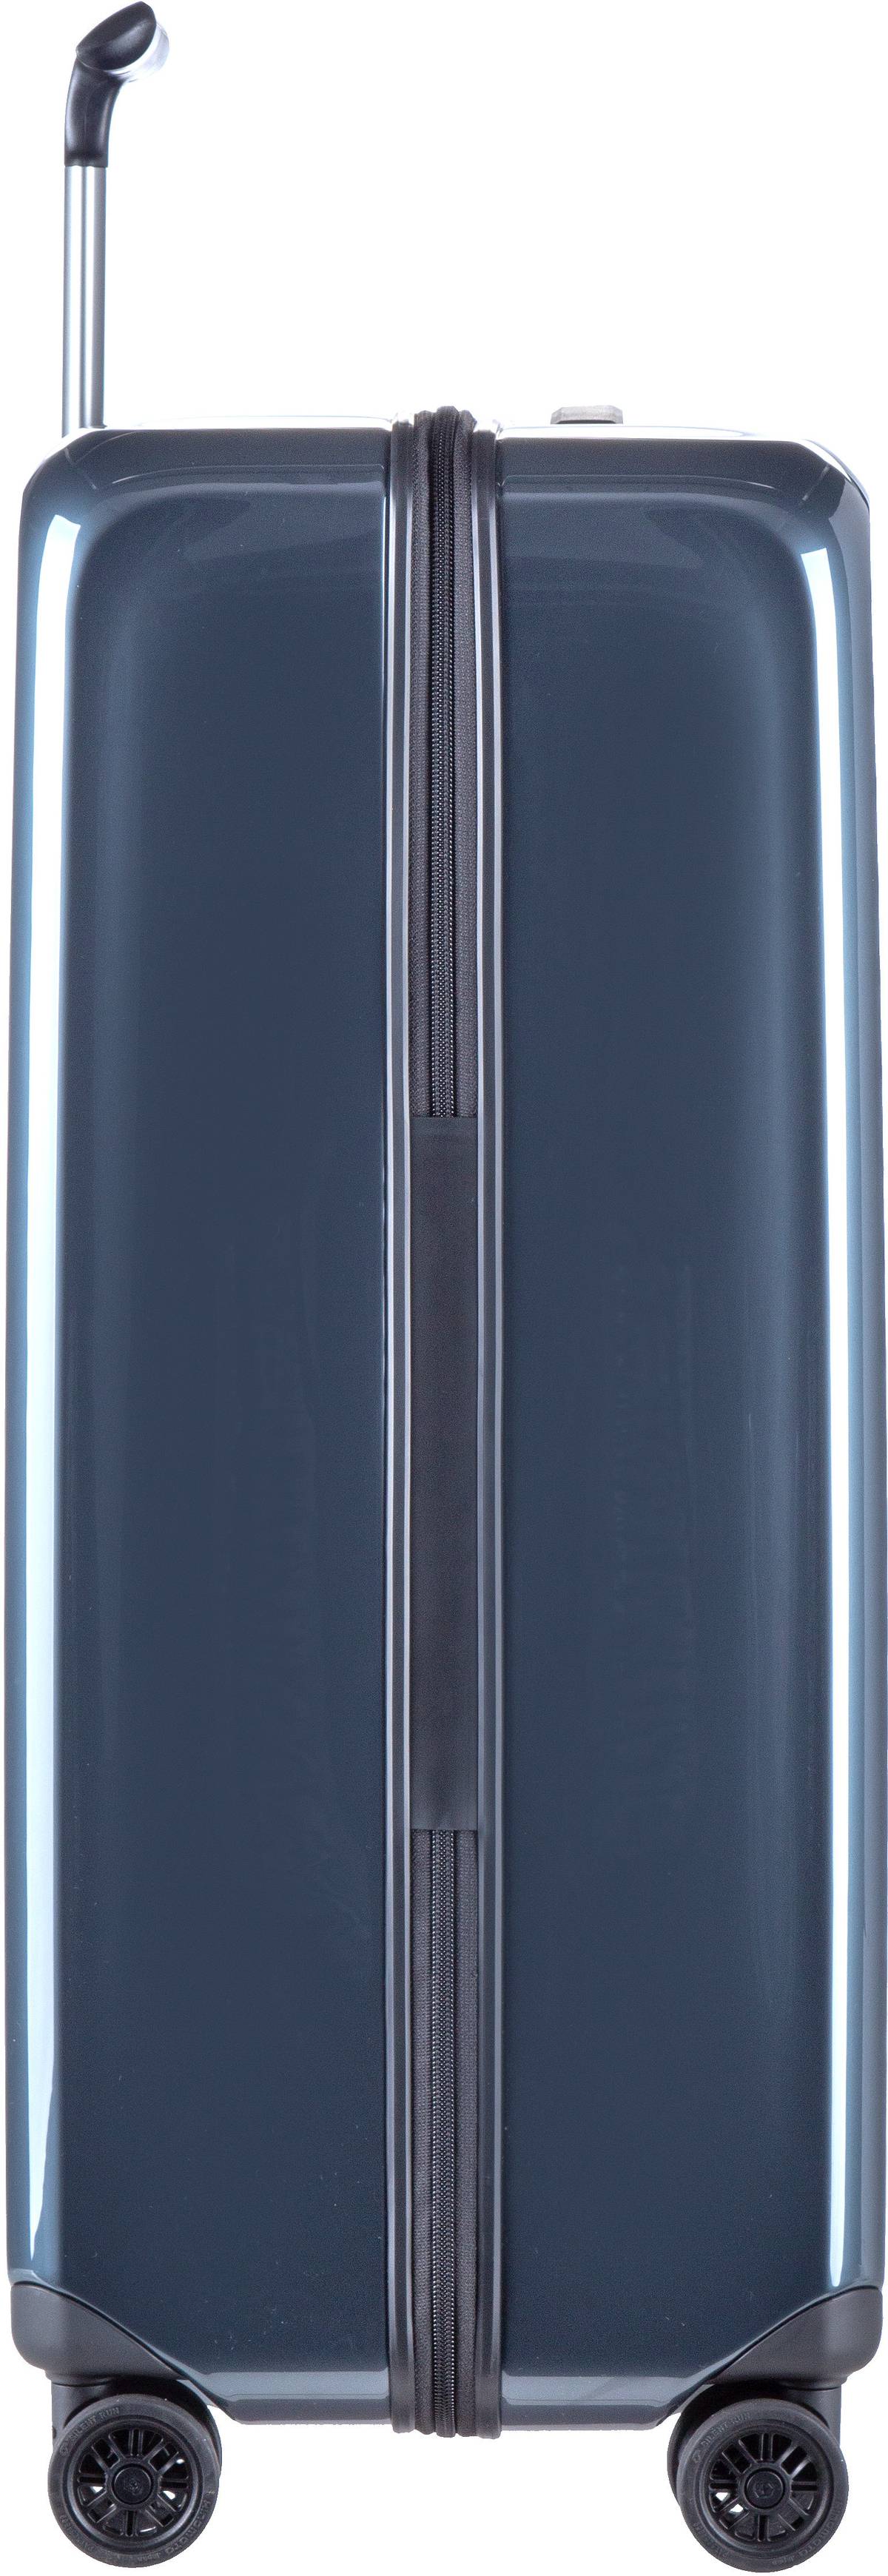 Victorinox Airox Large Hardside Case - Dark Blue